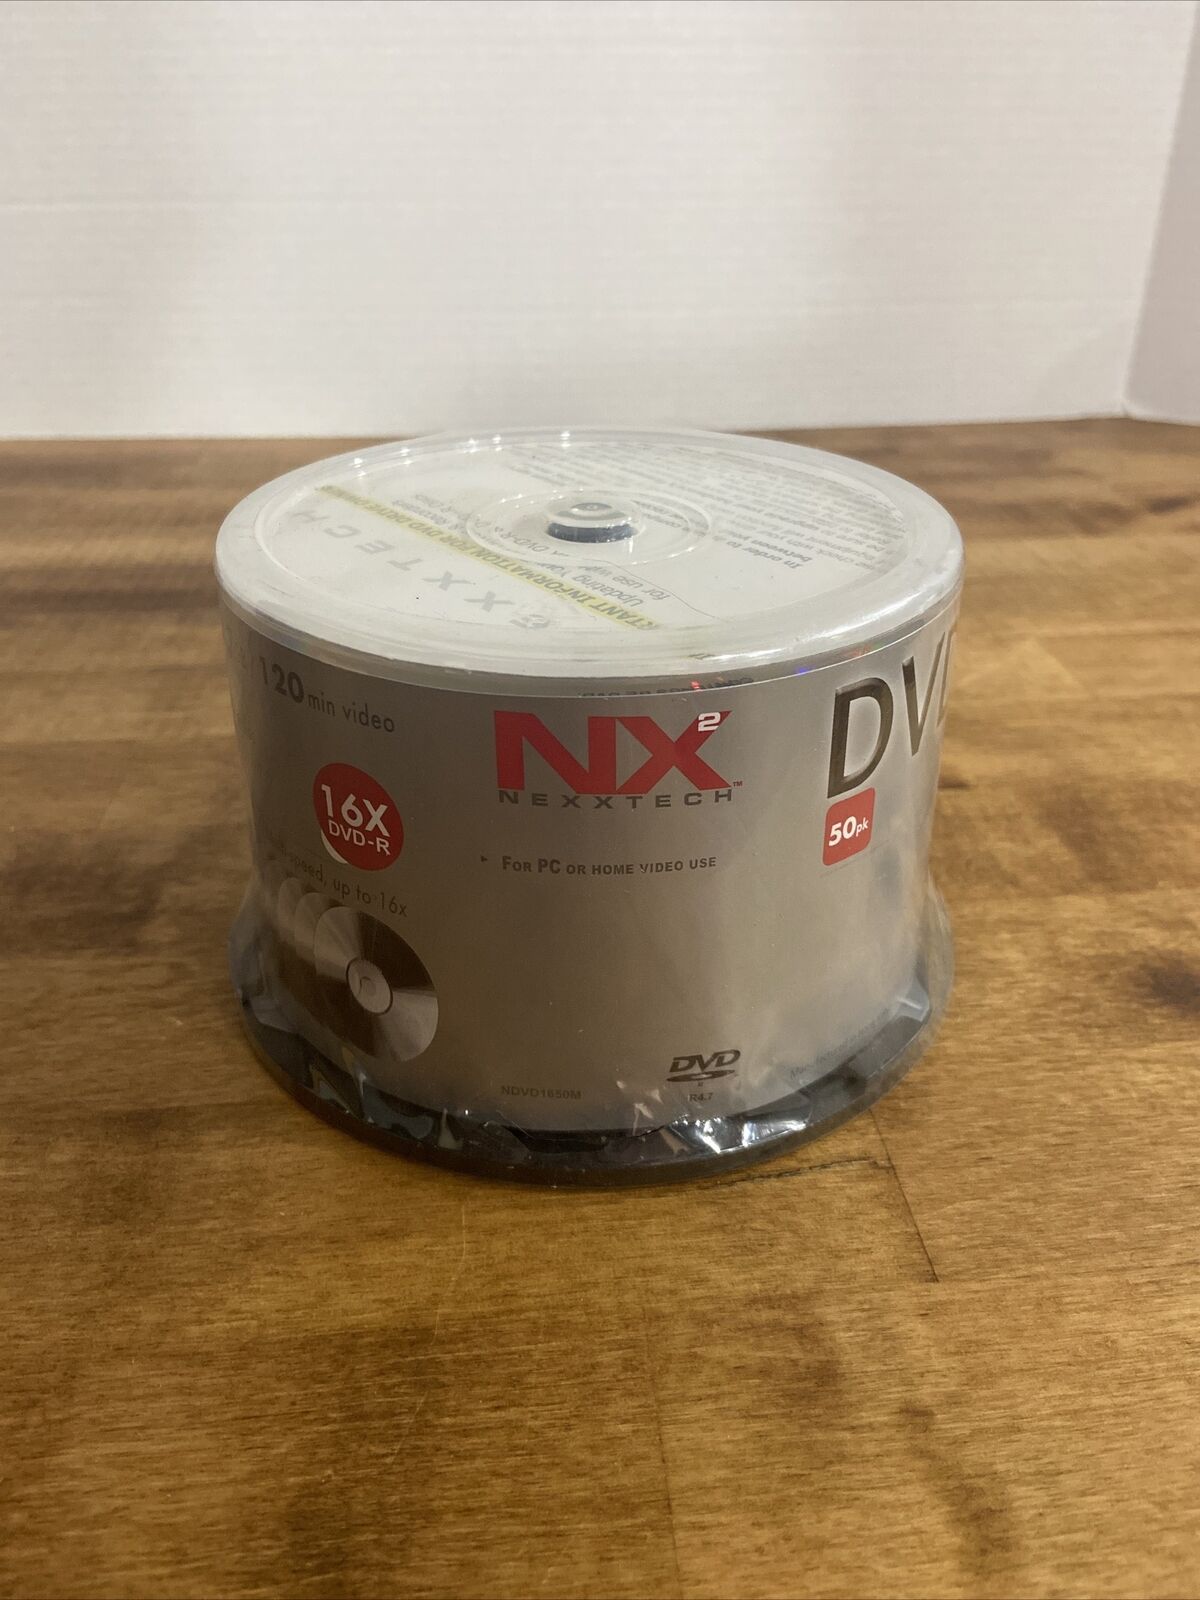  NEXXTECH 45/50 Pack DVD-R 4.7GB 120 Min Recordable Video Discs Multi-Speed 16x 